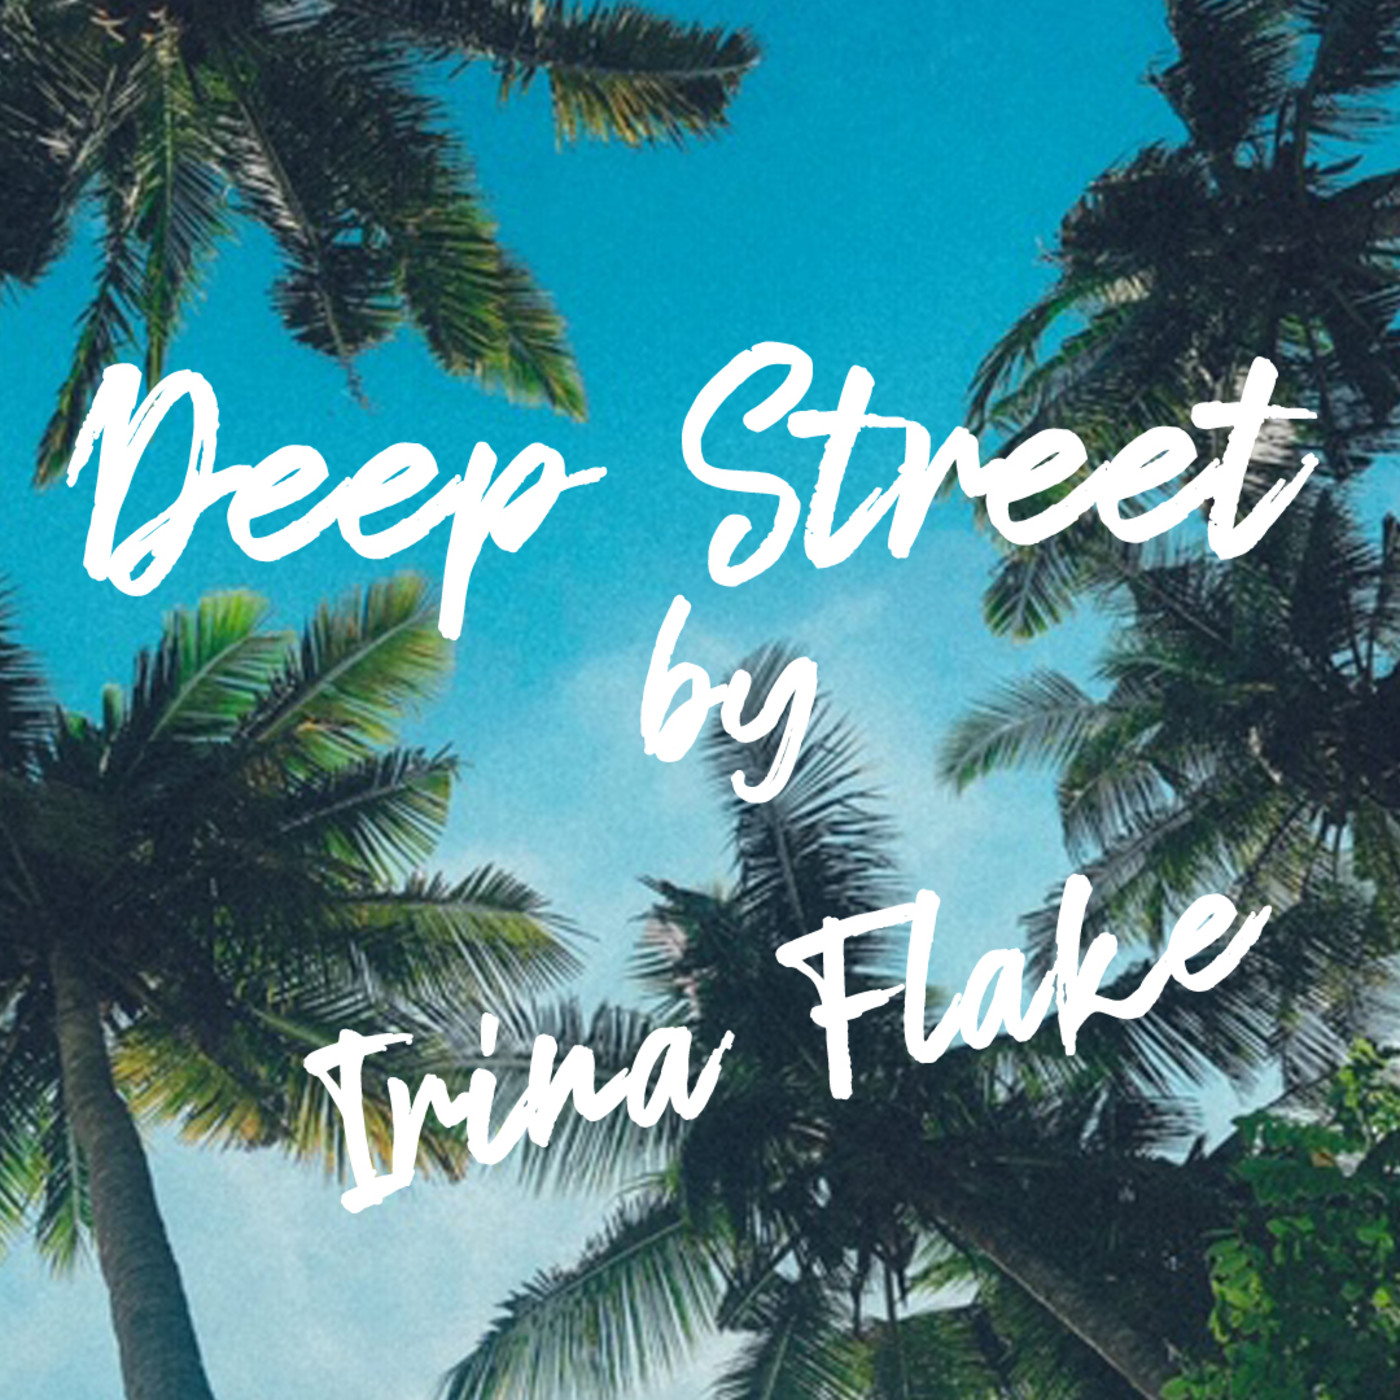 Deep Street by Irina Flake 09 @ Flaix FM 26.05.19